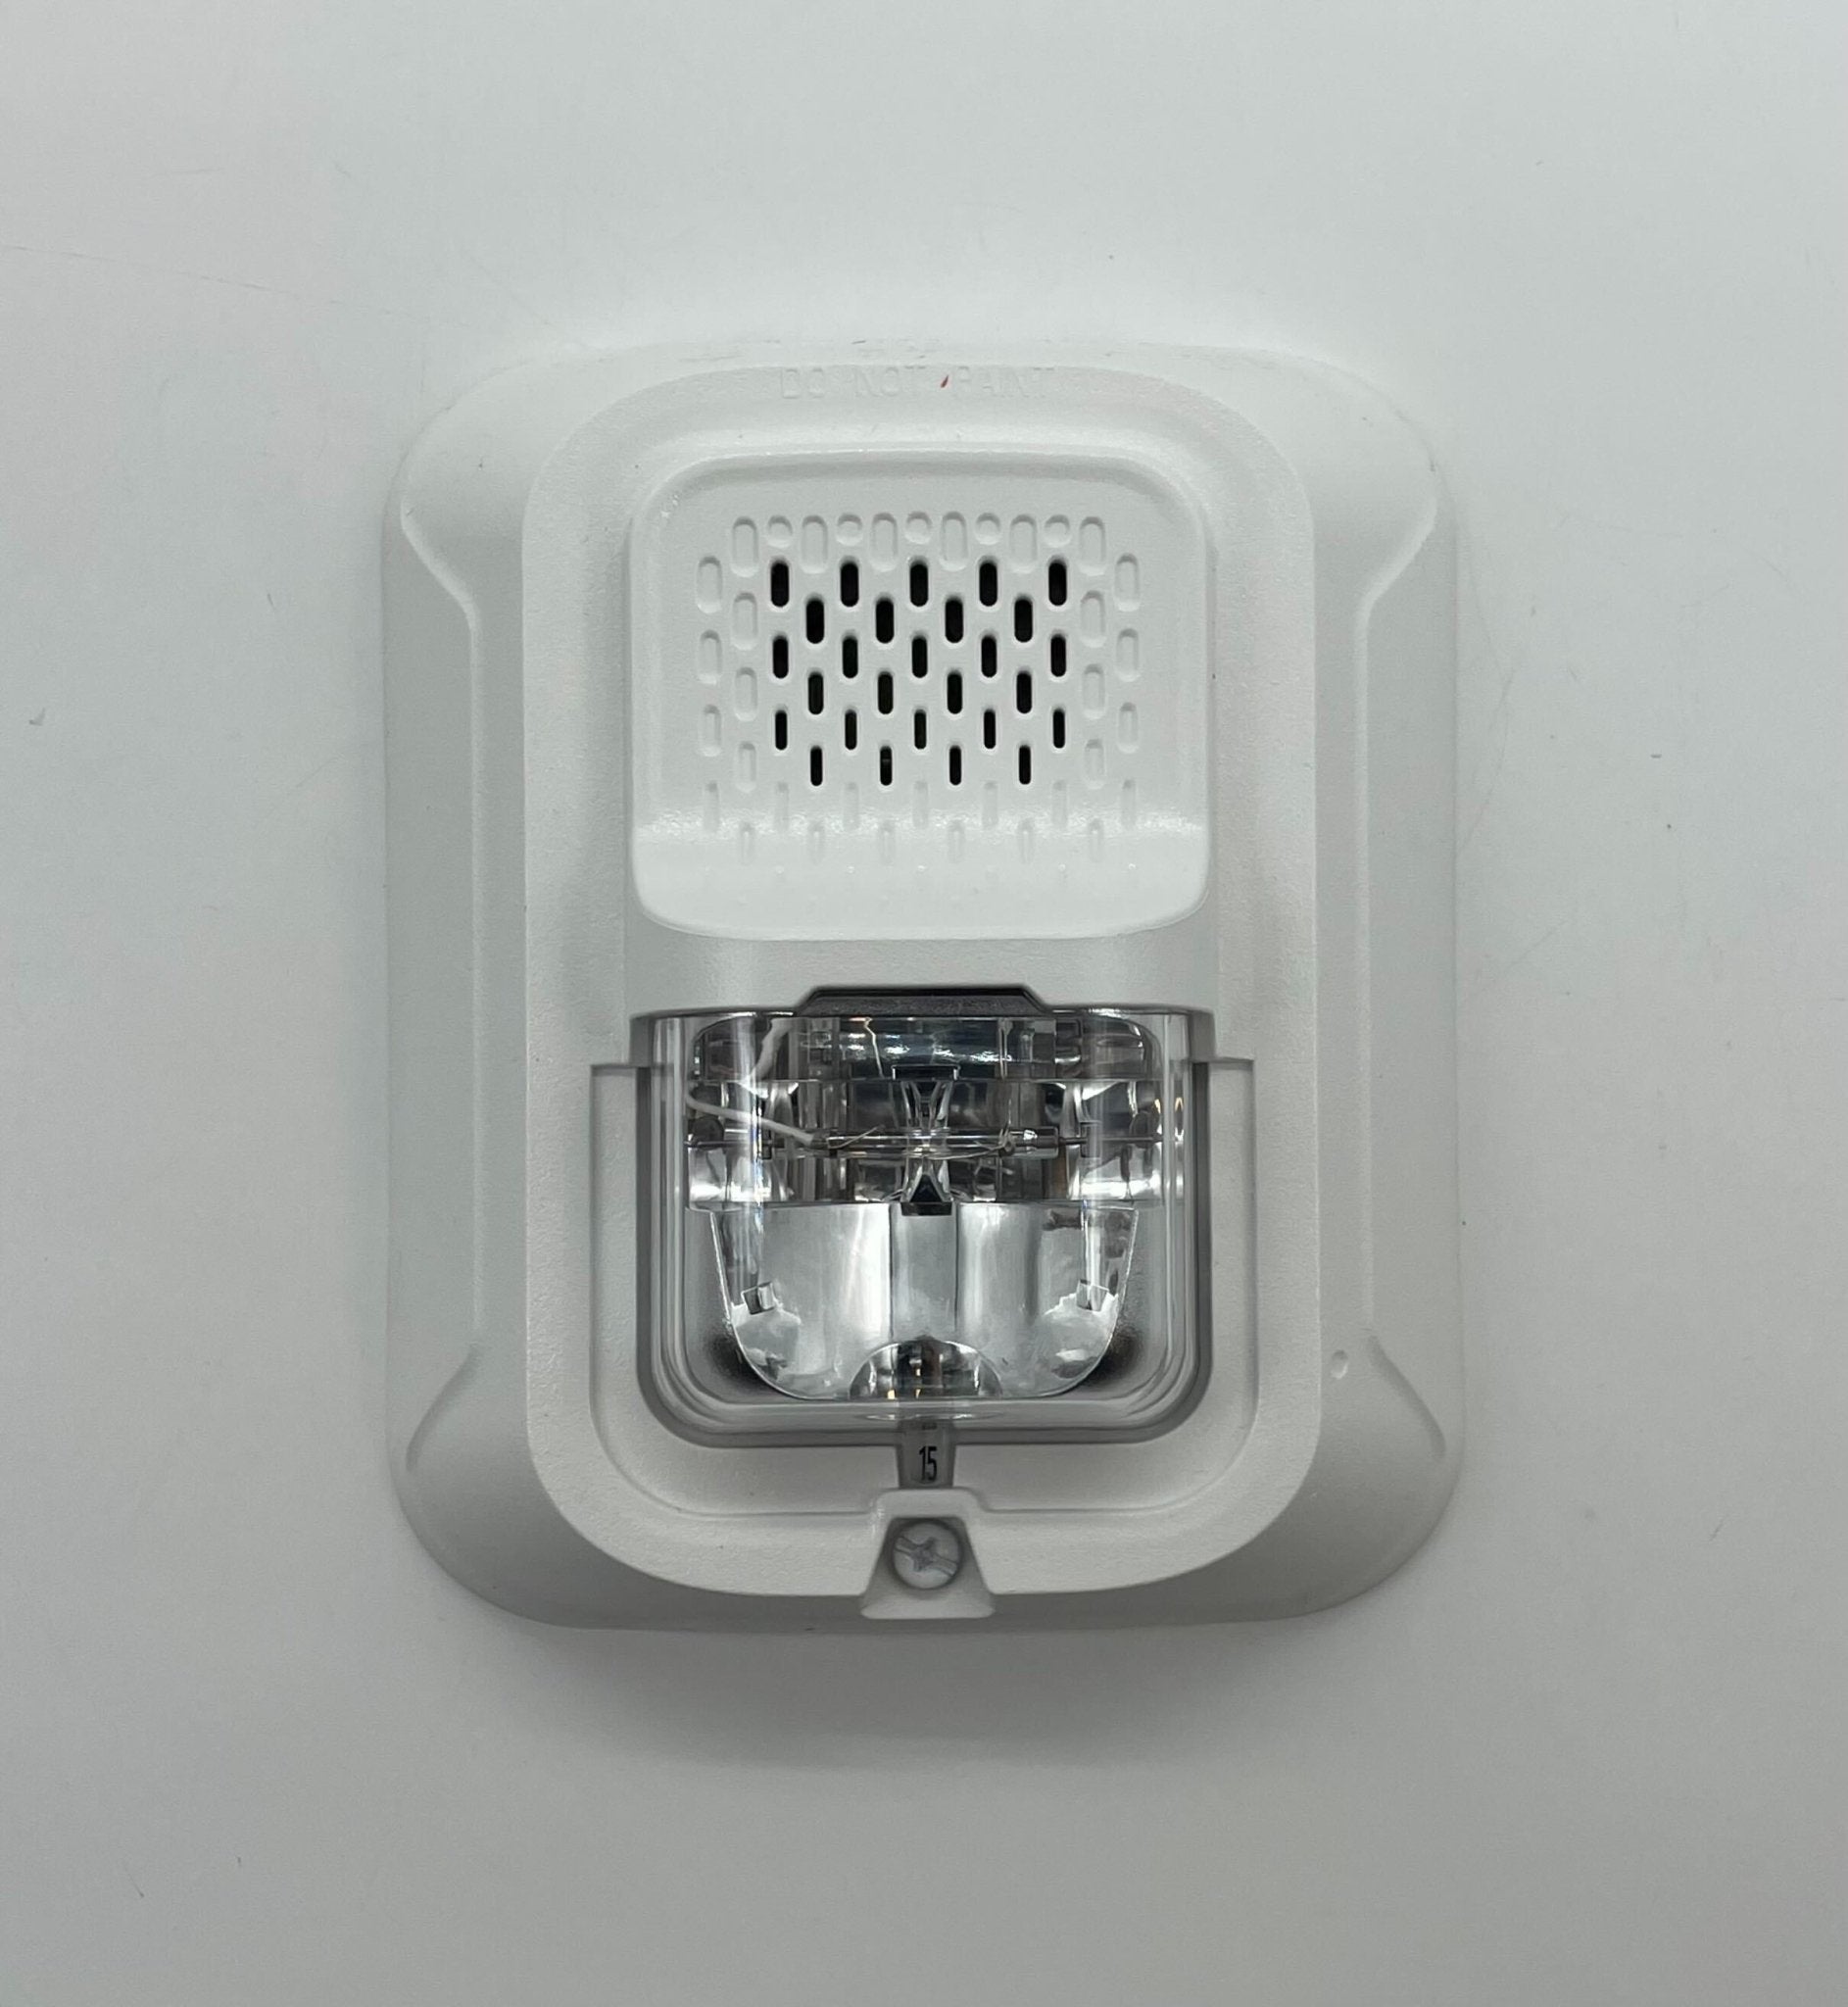 System Sensor P2WL-P - The Fire Alarm Supplier